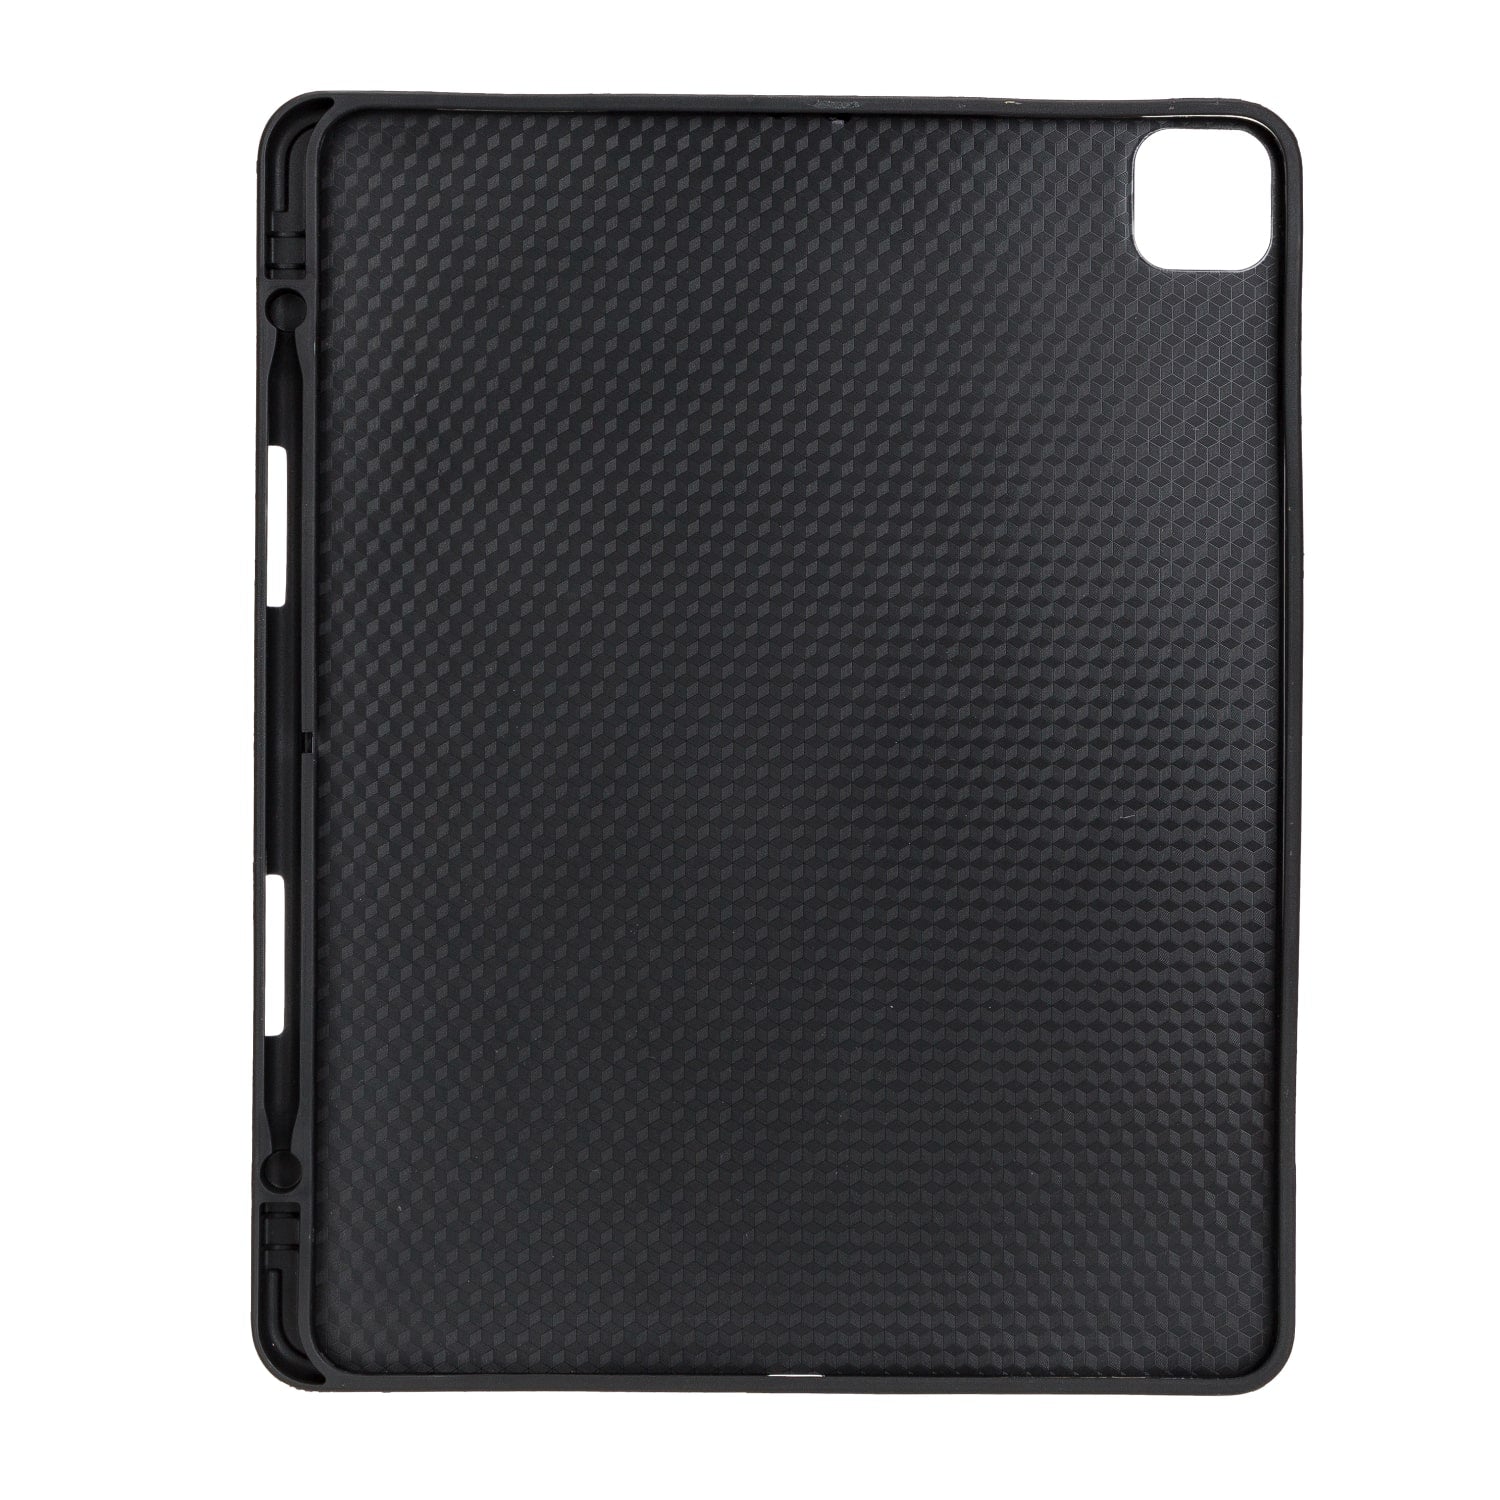 Brown Leather iPad Pro 12.9 Inc Smart Folio Case with Apple Pen Holder - Bomonti - 6